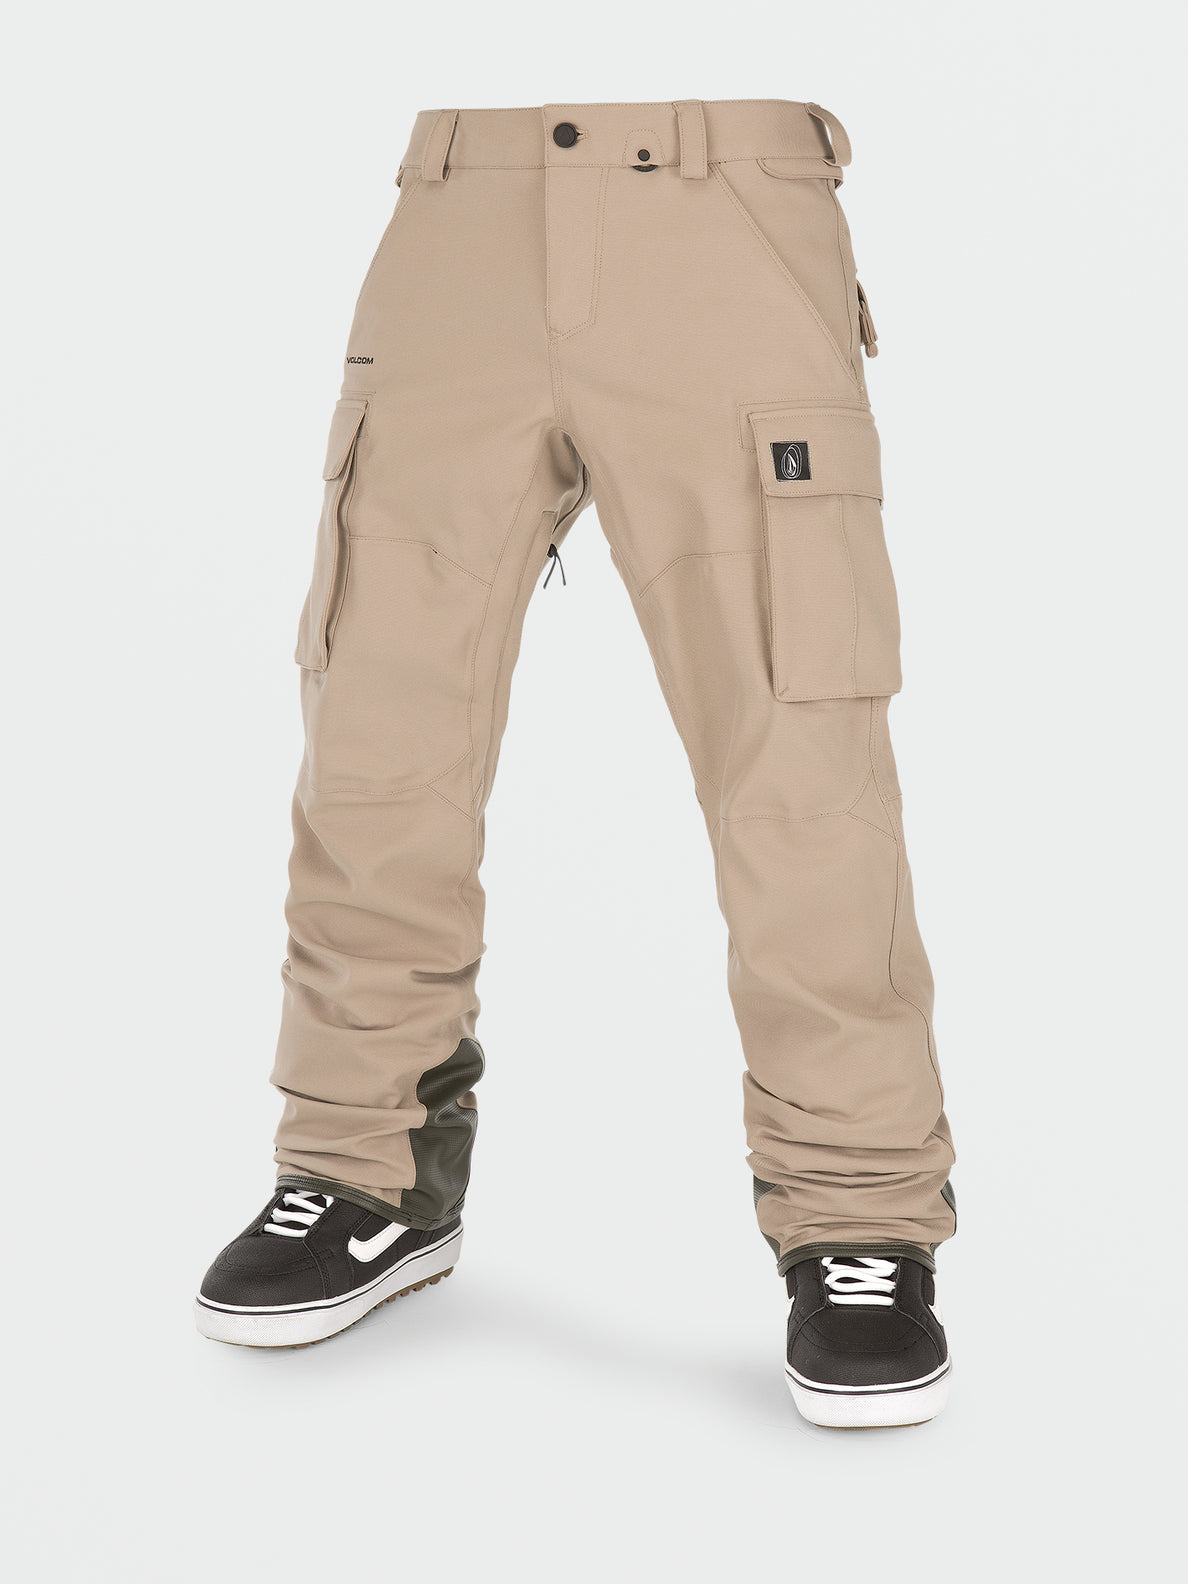 Mens New Articulated Pants - Dark Khaki